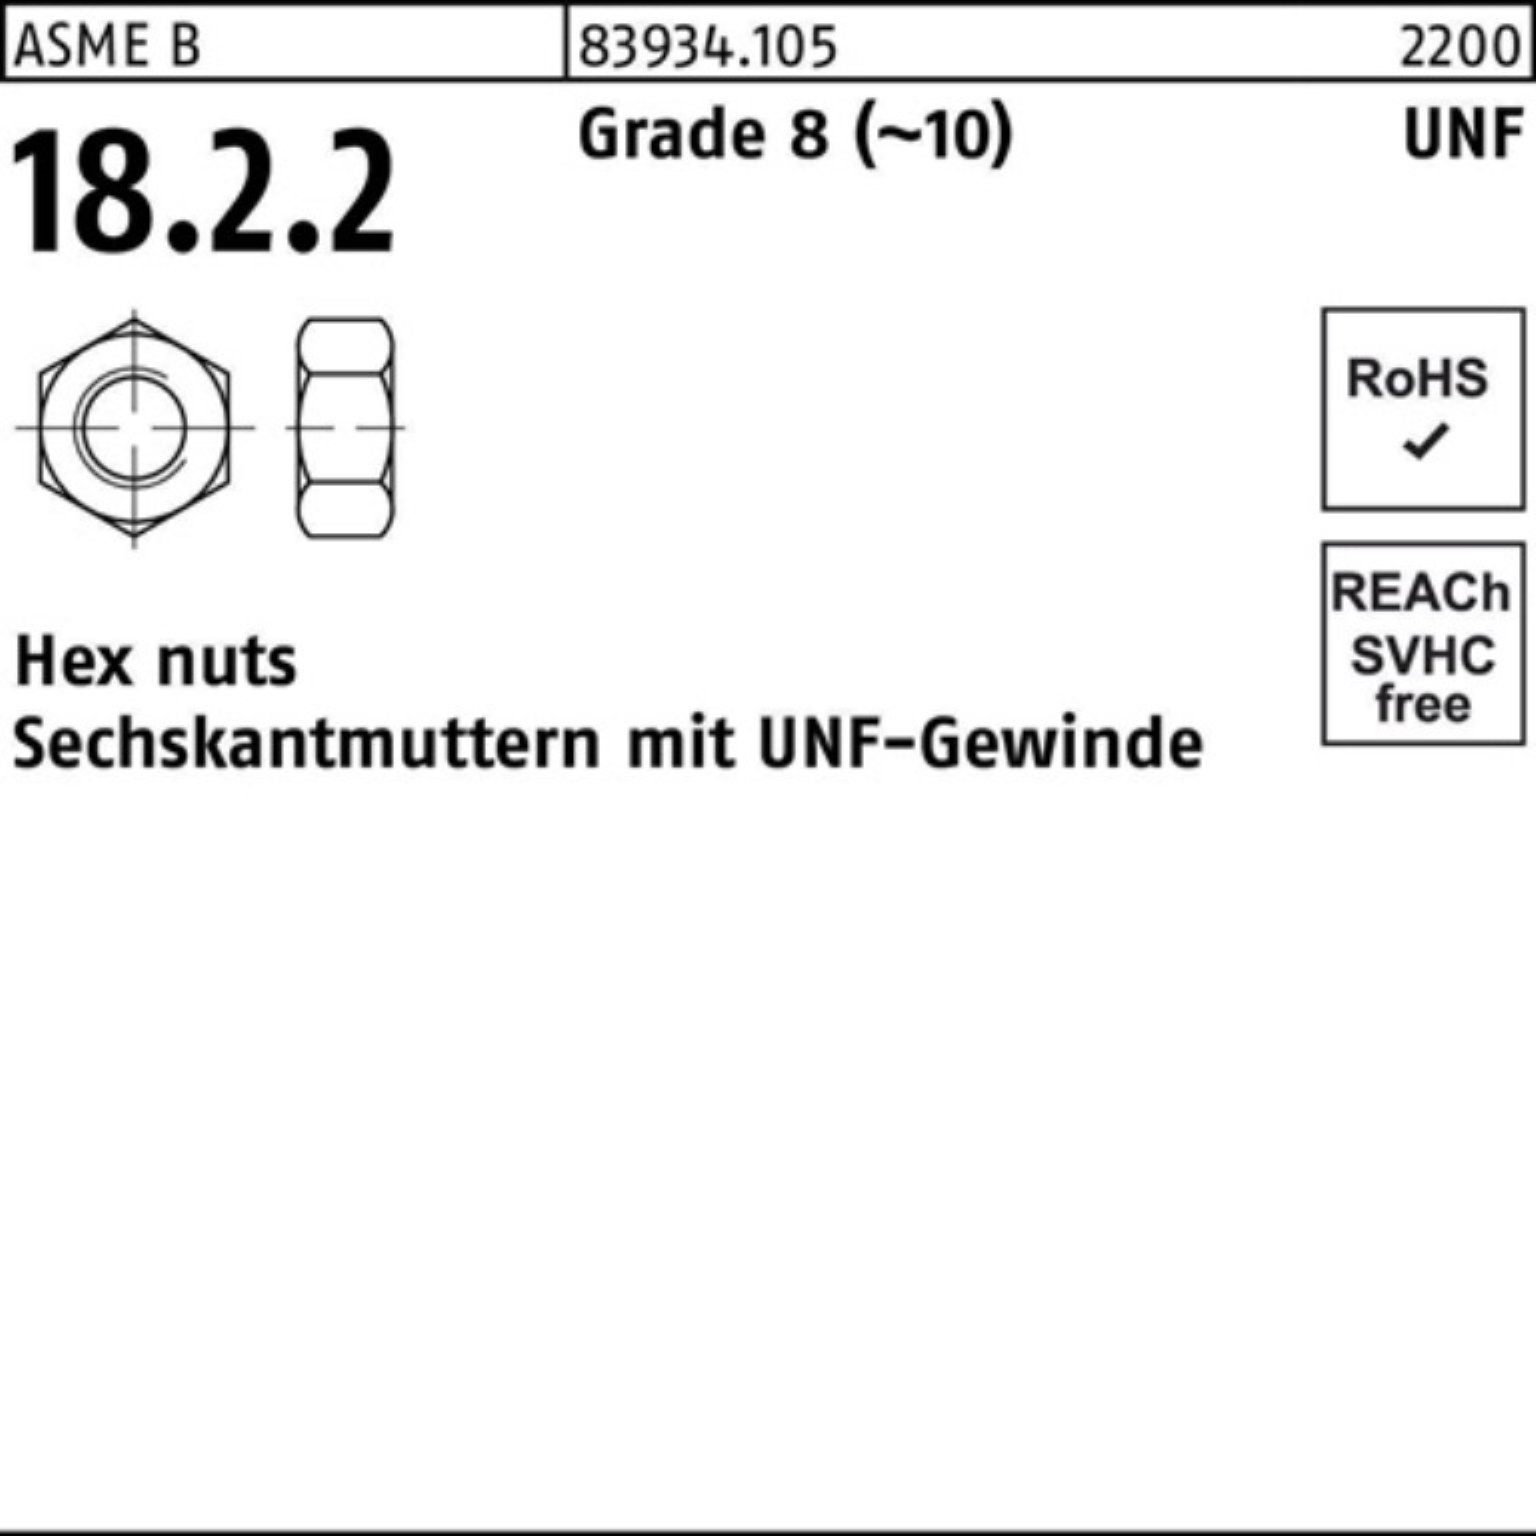 Muttern (10) 83934 R 8 100 100er 5/16 UNF-Gewinde Reyher Grade Pack Sechskantmutter